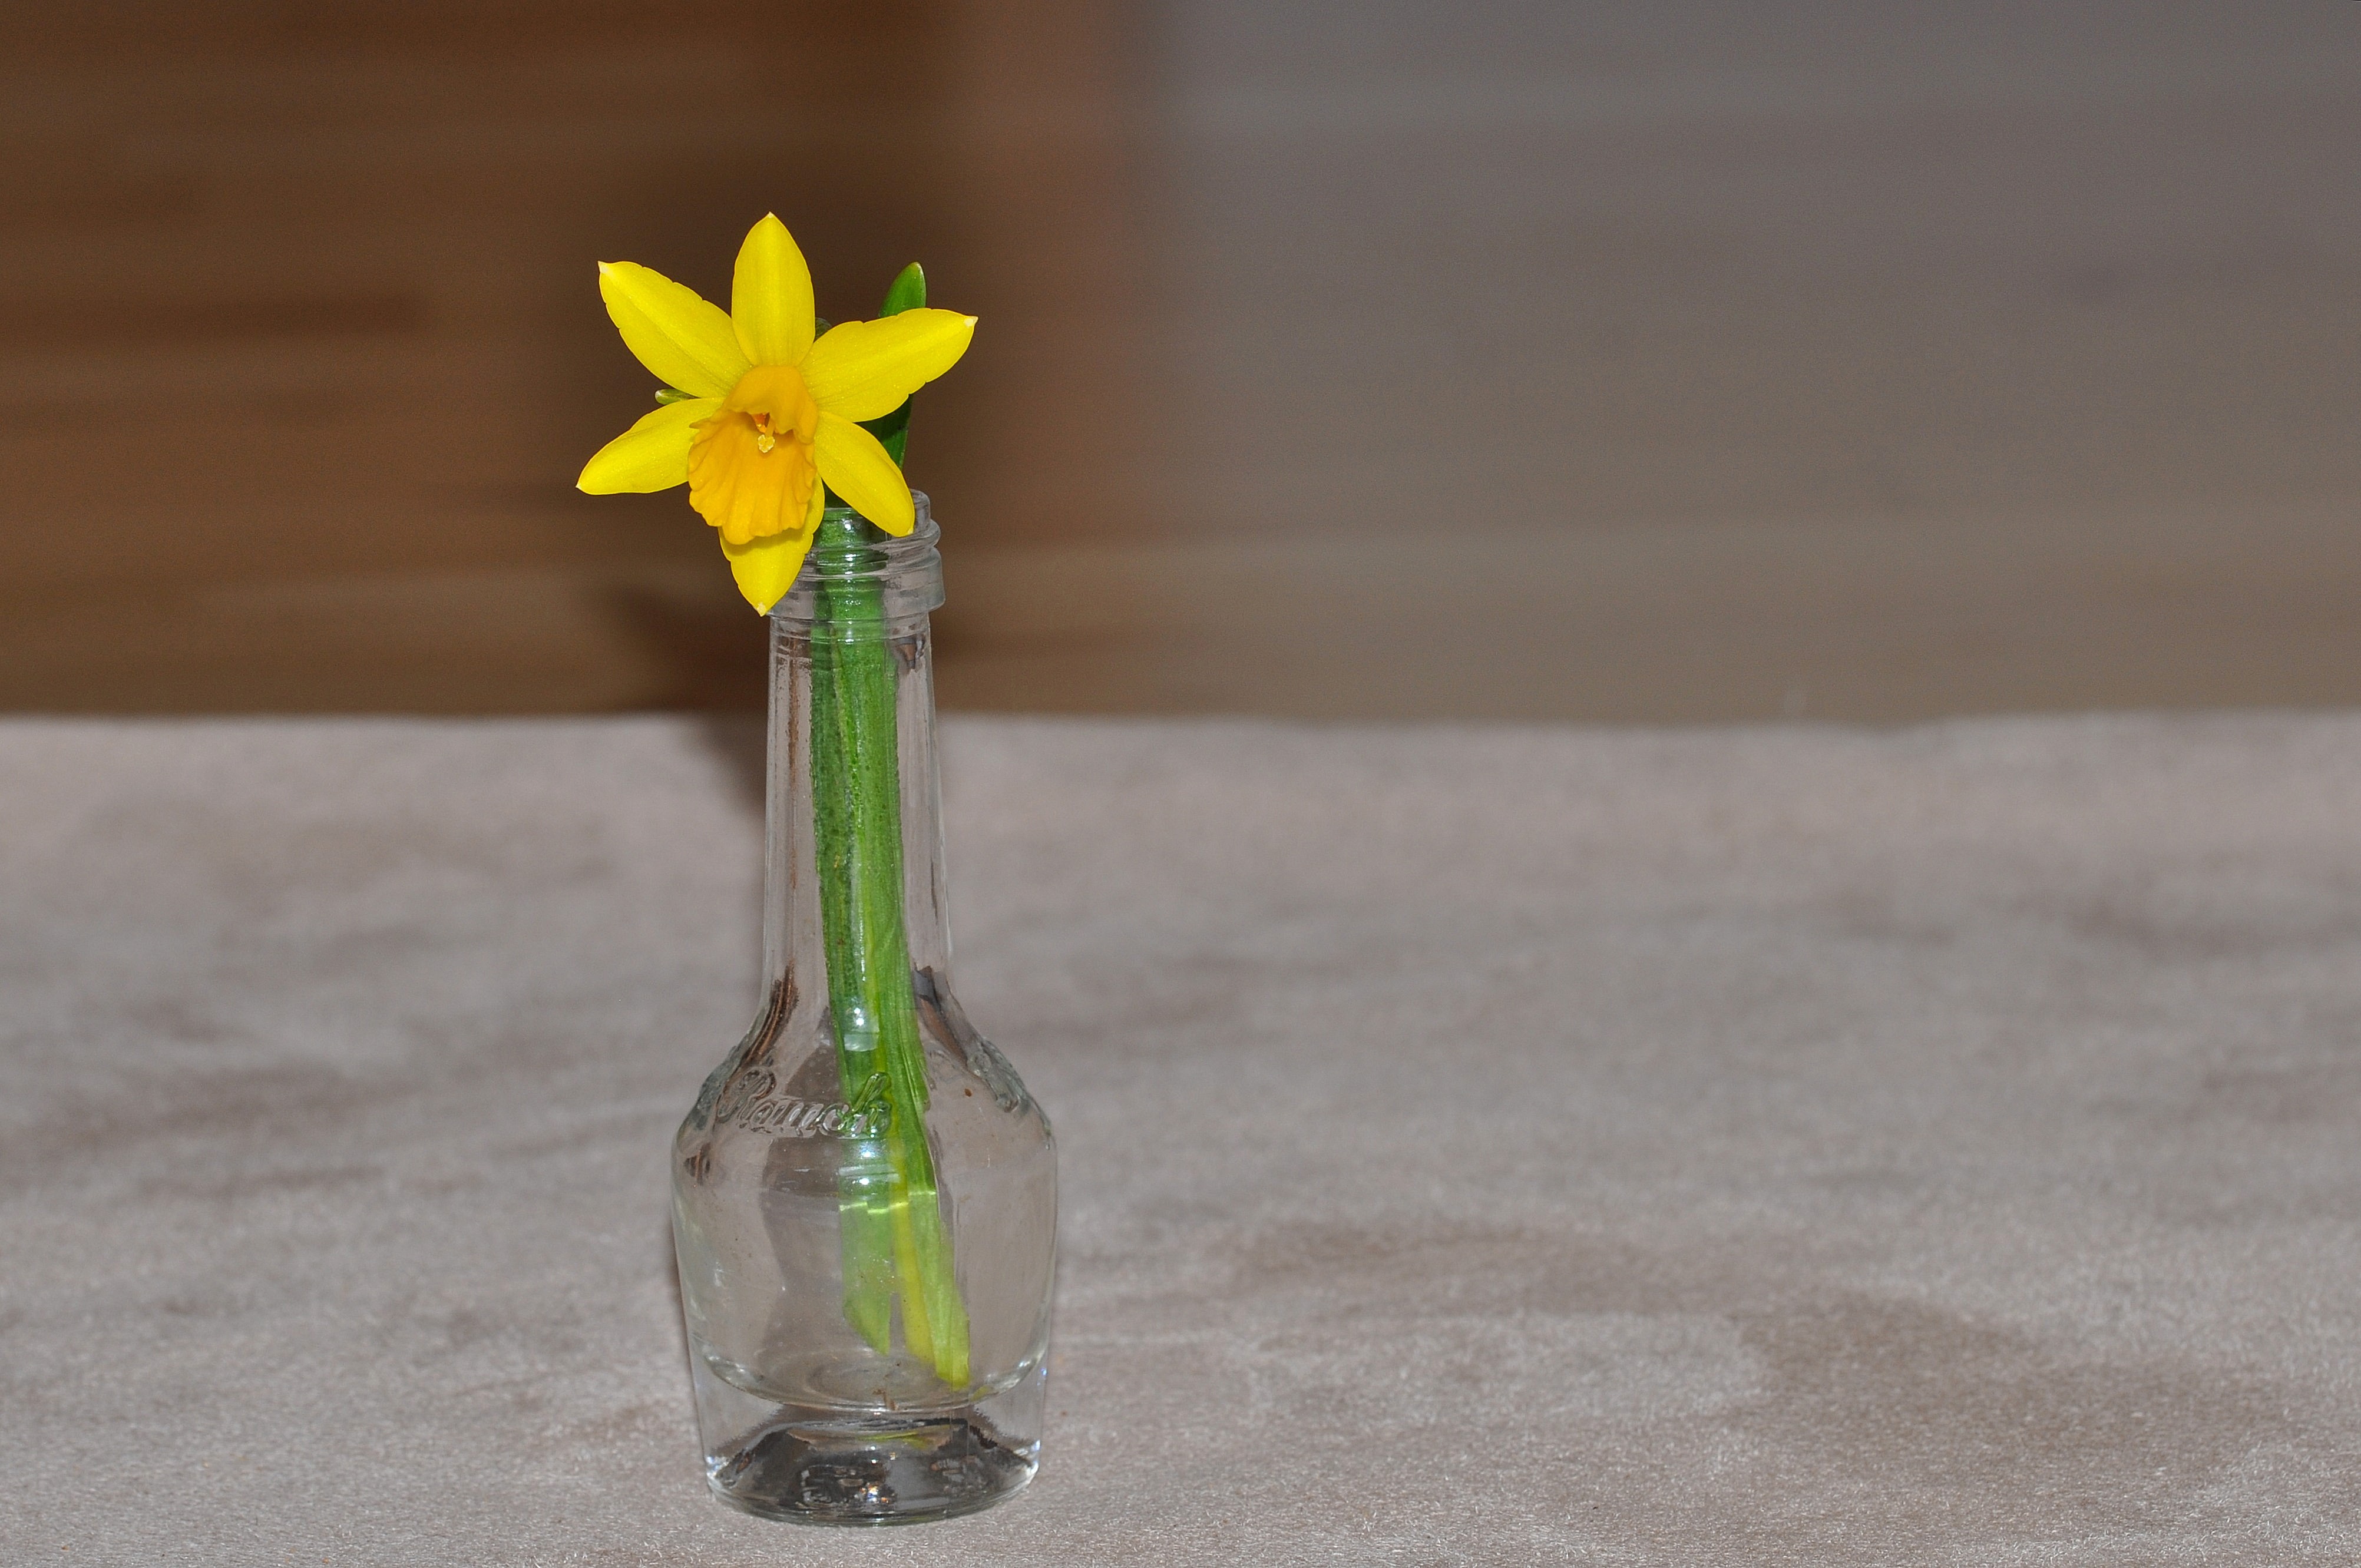 Flower in the bottle photo